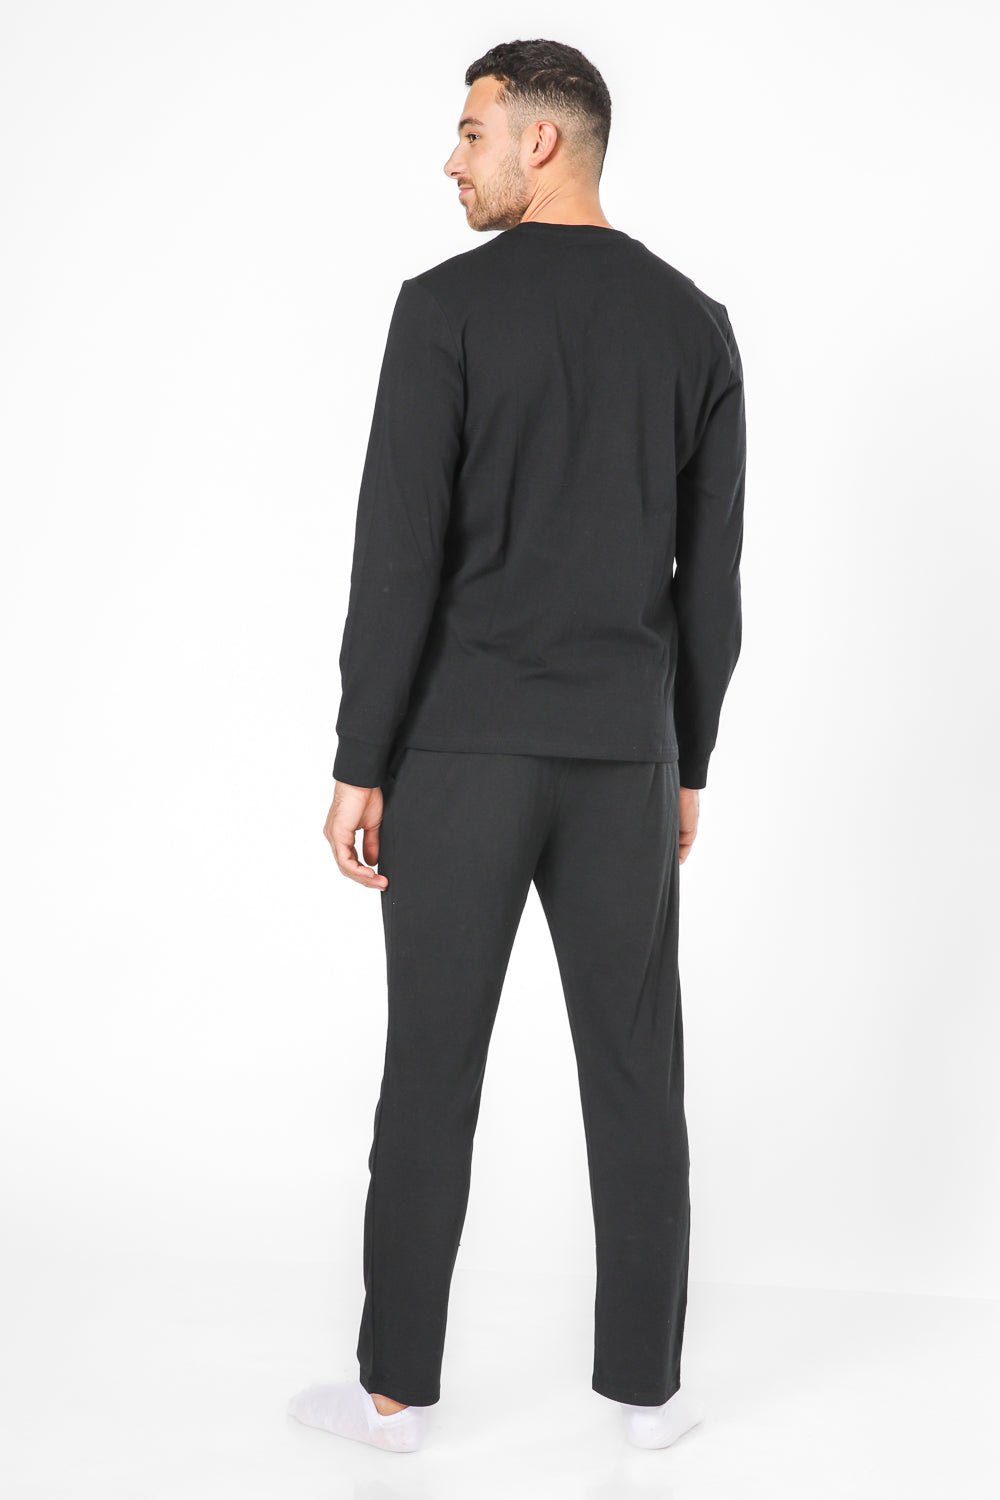 DELTA - חולצה ארוכה דקה צווארון עגול יוניסקס ®SMILEYWORLD - MASHBIR//365